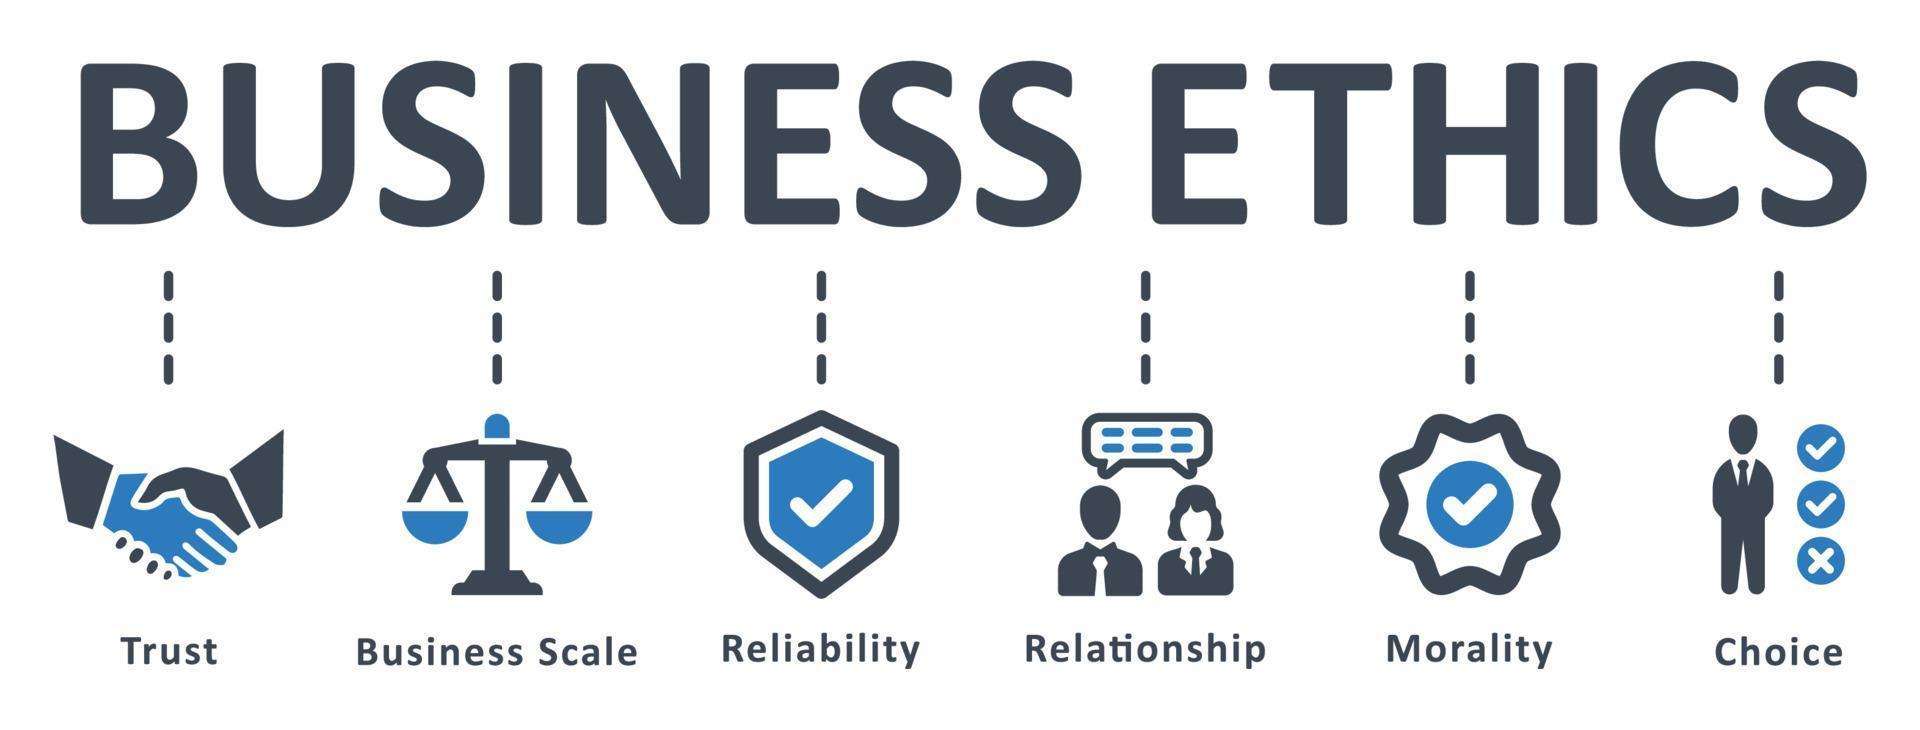 business-ethics-icon-illustration-business-ethics-behavior-responsibility-trust-reputation-goal-infographic-template-presentation-concept-banner-pictogram-icon-set-icons-vector